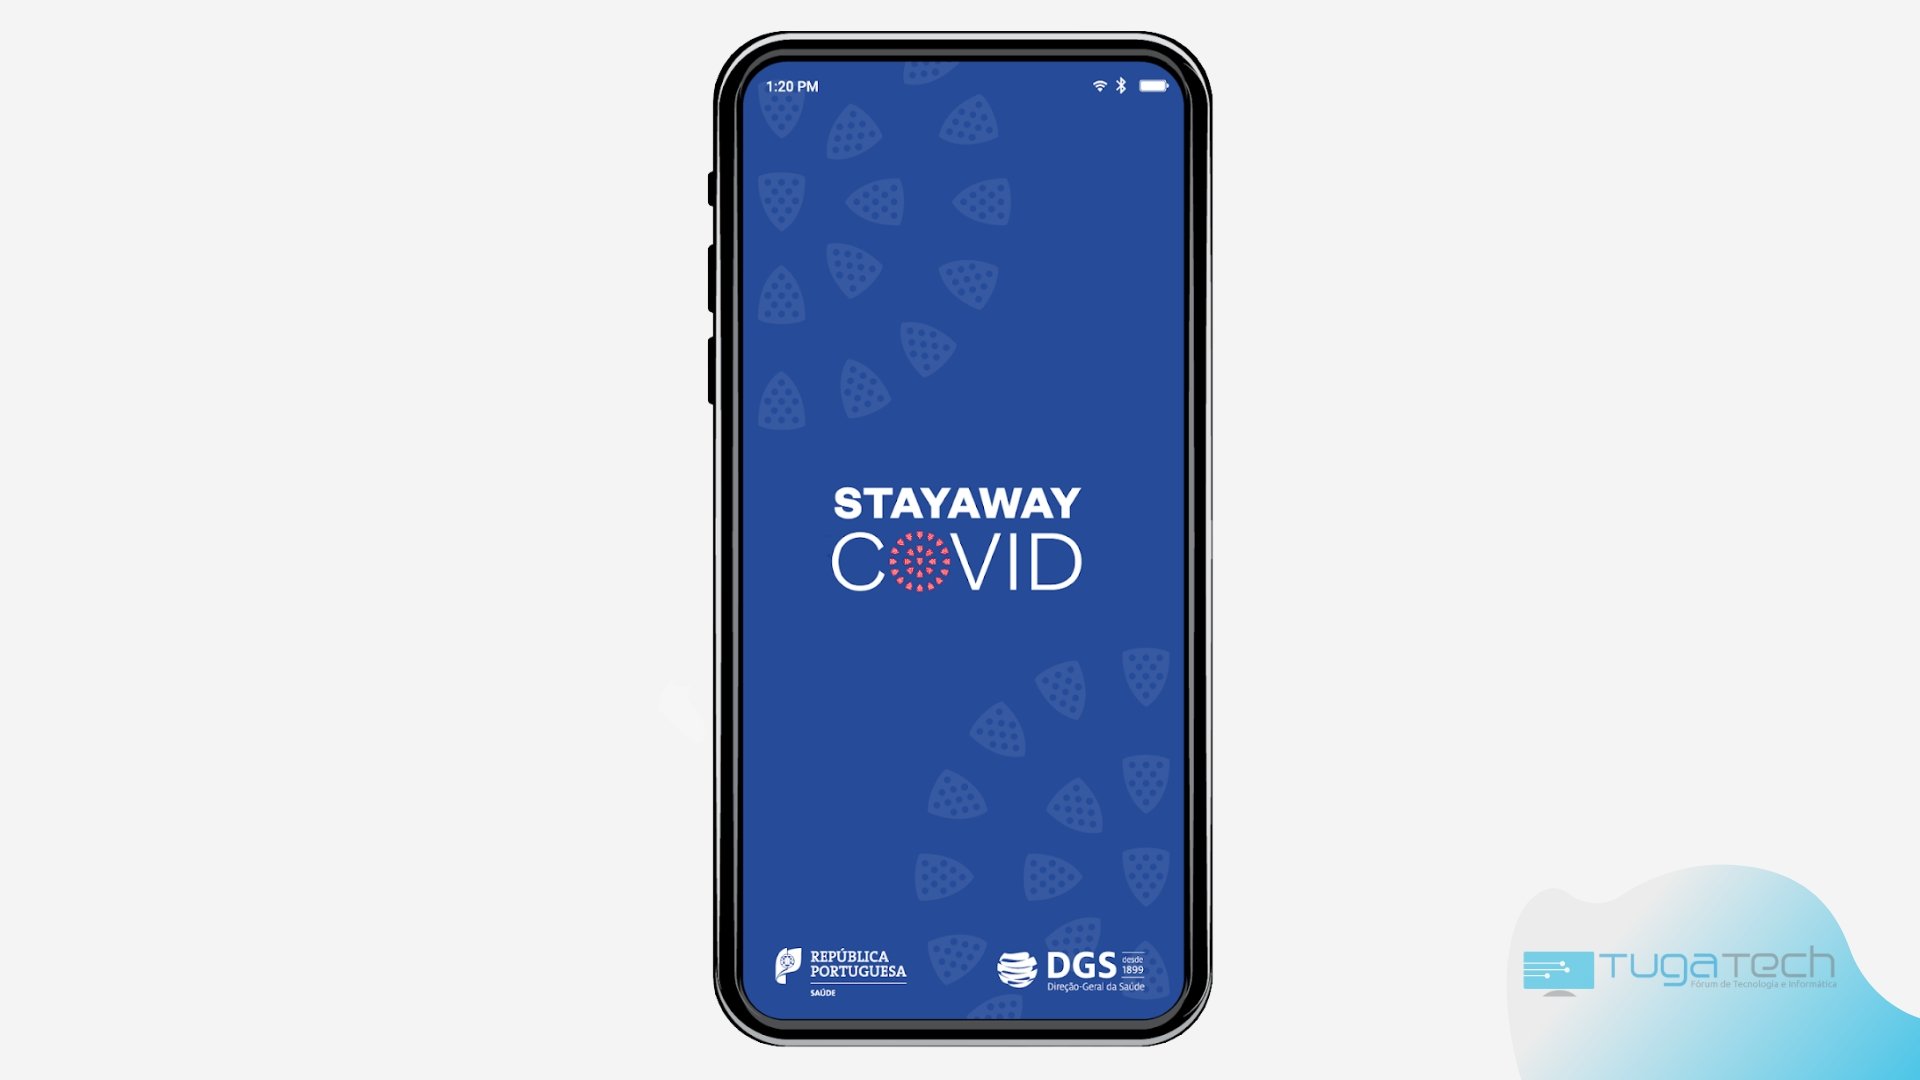 StayAway COVID deixa oficialmente de se encontrar disponível